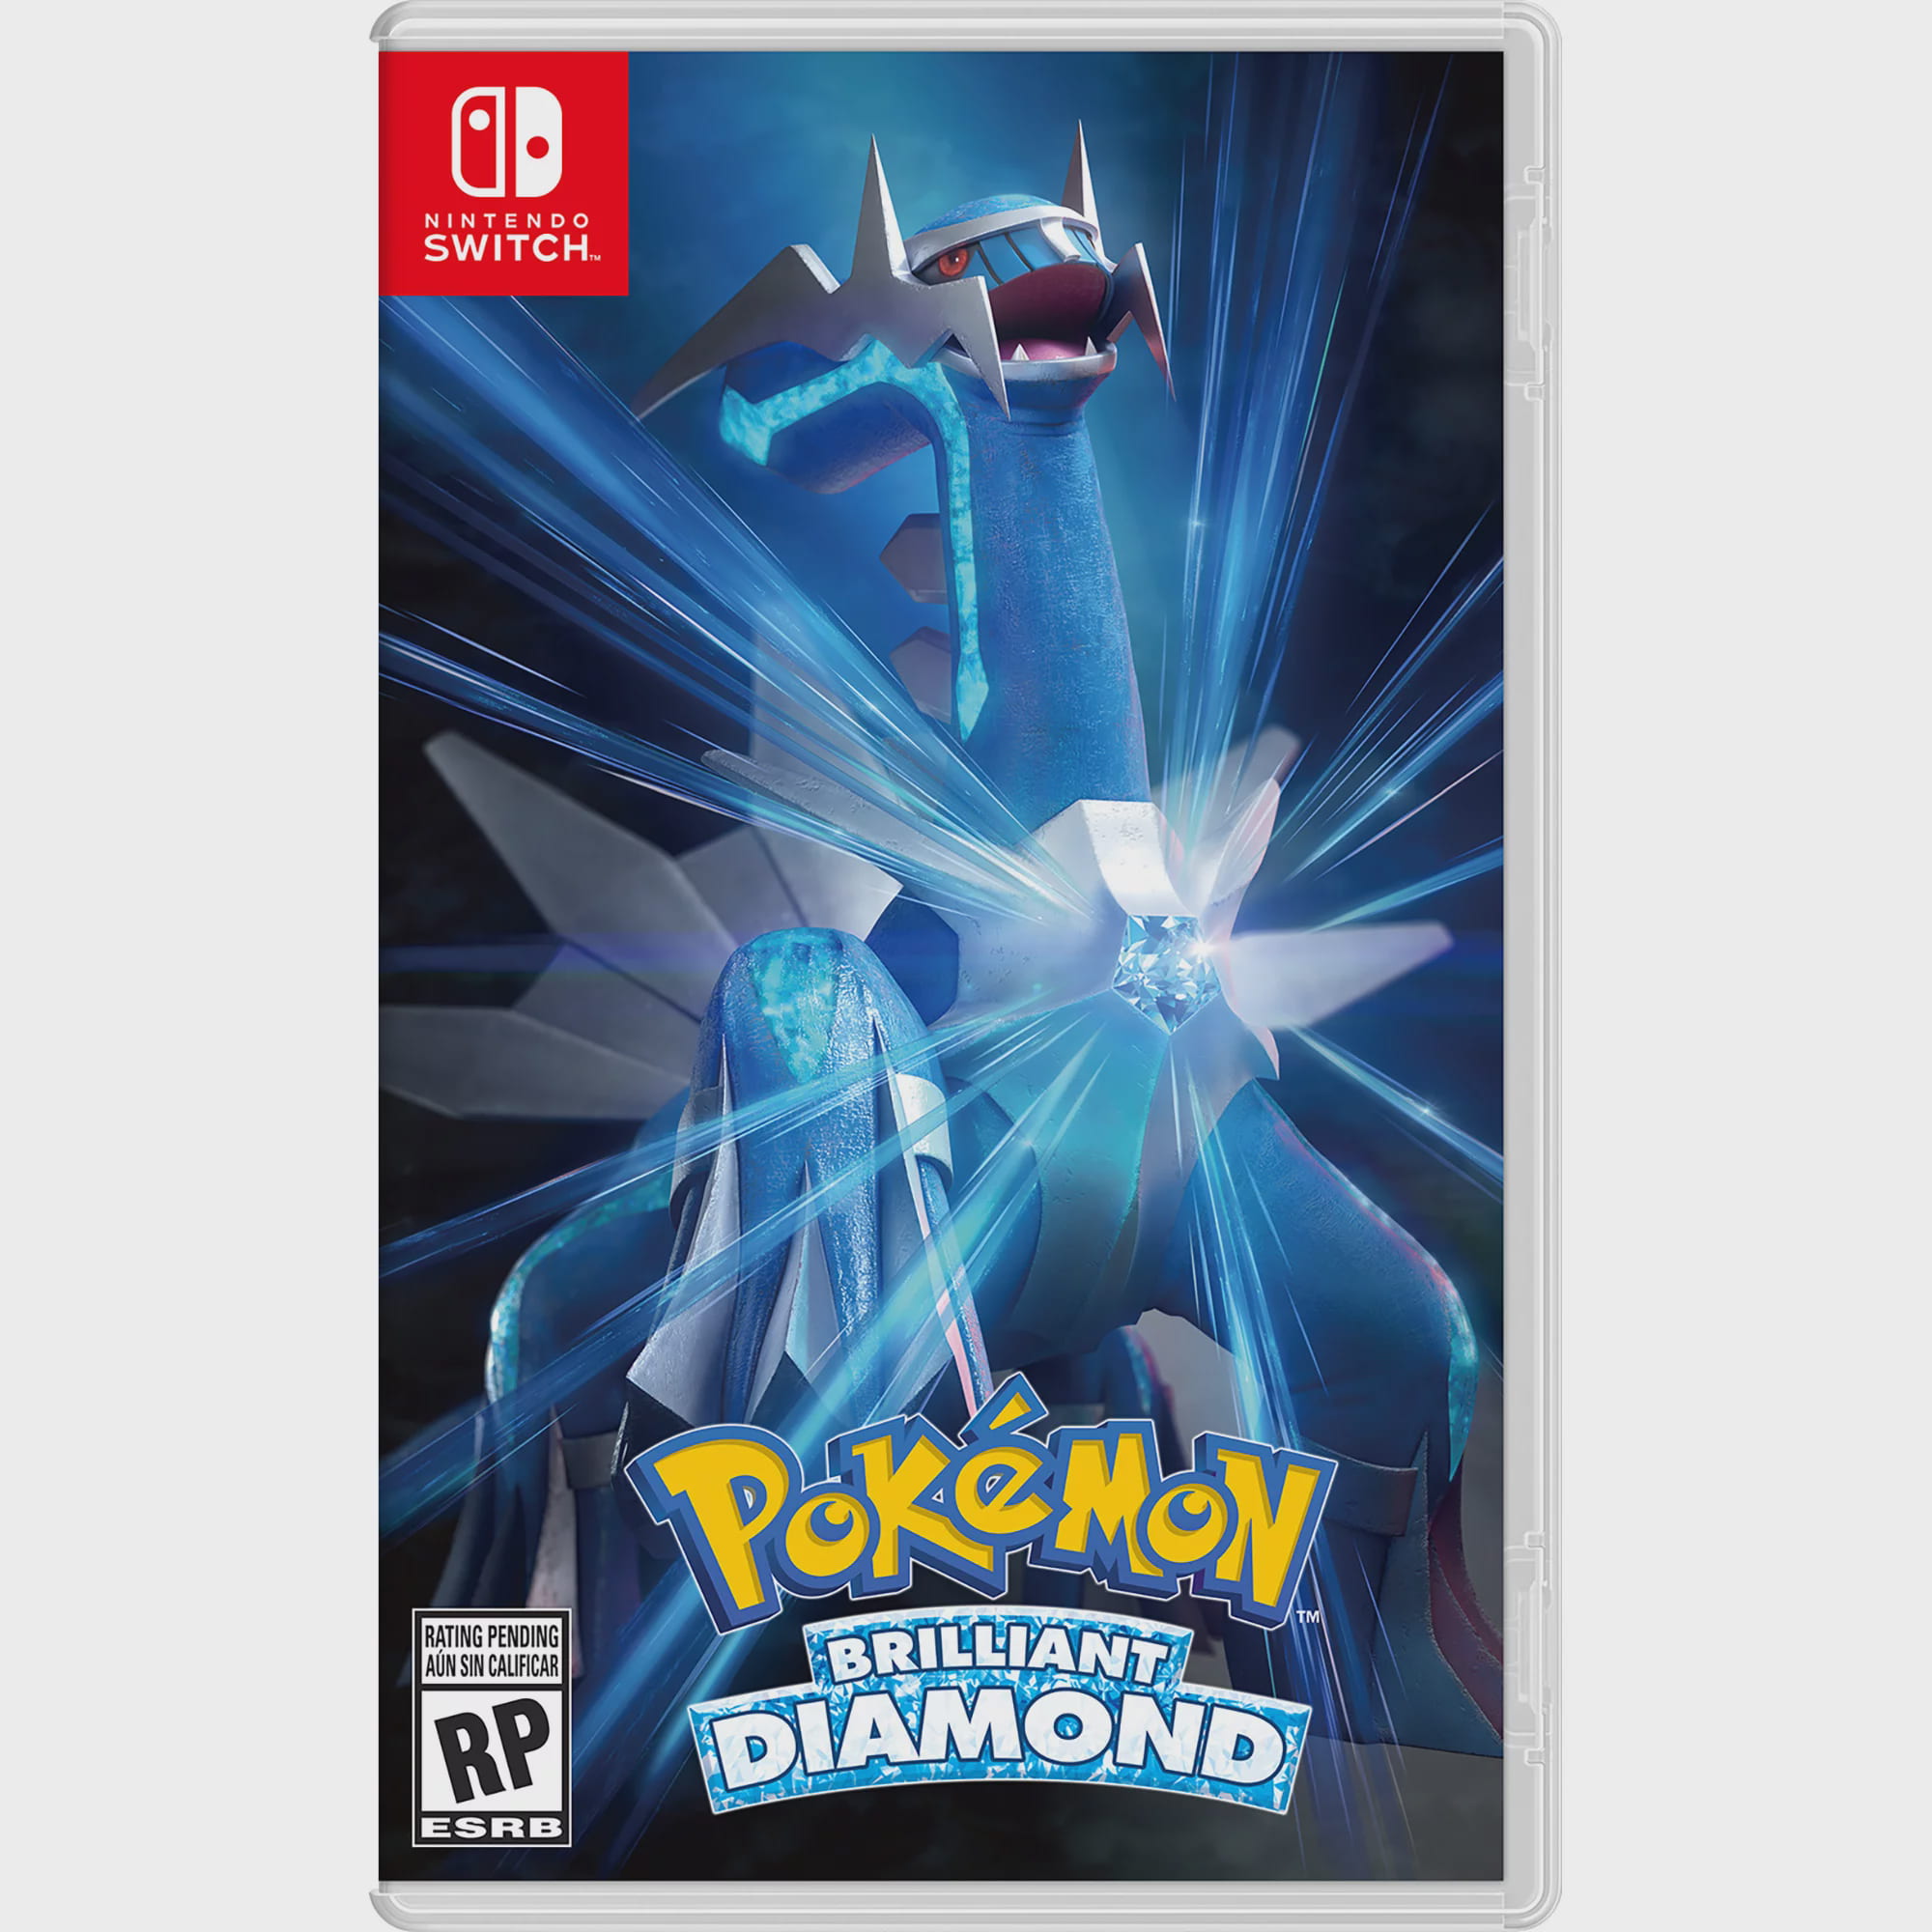 Pokemon Brilliant Diamond, Nintendo Switch, Physical Edition